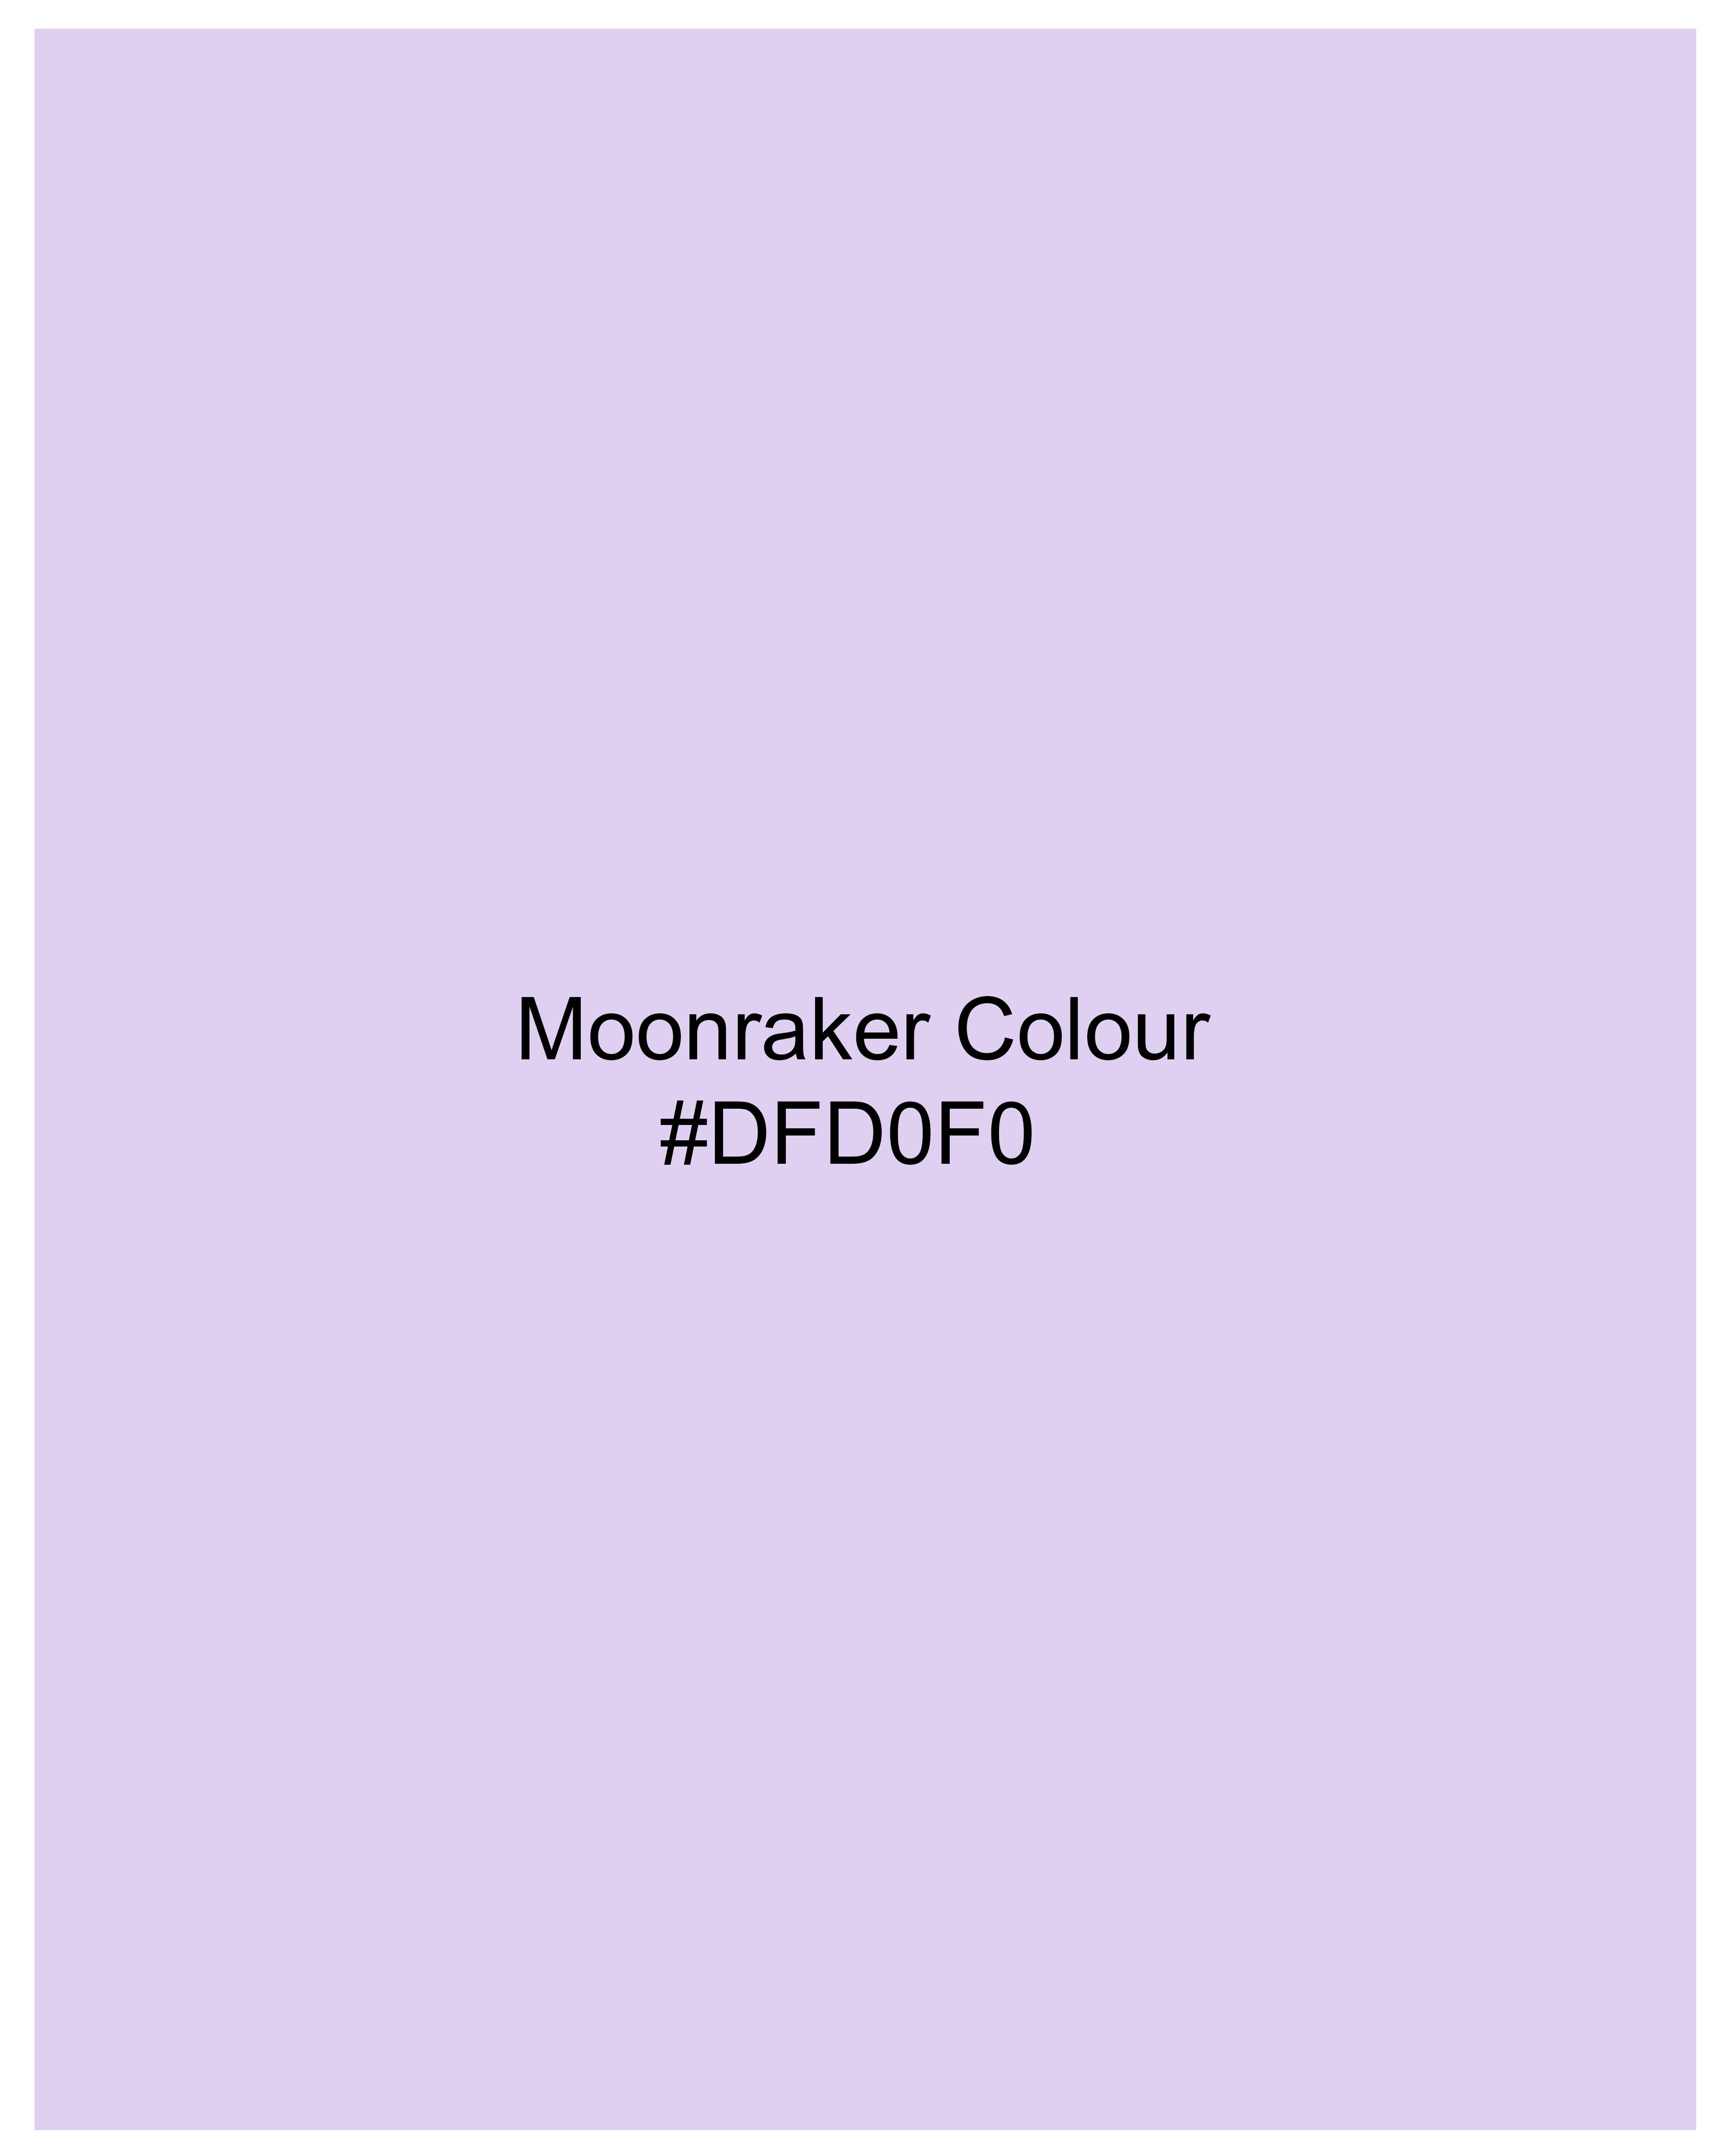 Moonraker Lavender Embroidered Premium Cotton Designer Shirt 9983-M-P354-38, 9983-M-P354-H-38, 9983-M-P354-39, 9983-M-P354-H-39, 9983-M-P354-40, 9983-M-P354-H-40, 9983-M-P354-42, 9983-M-P354-H-42, 9983-M-P354-44, 9983-M-P354-H-44, 9983-M-P354-46, 9983-M-P354-H-46, 9983-M-P354-48, 9983-M-P354-H-48, 9983-M-P354-50, 9983-M-P354-H-50, 9983-M-P354-52, 9983-M-P354-H-52